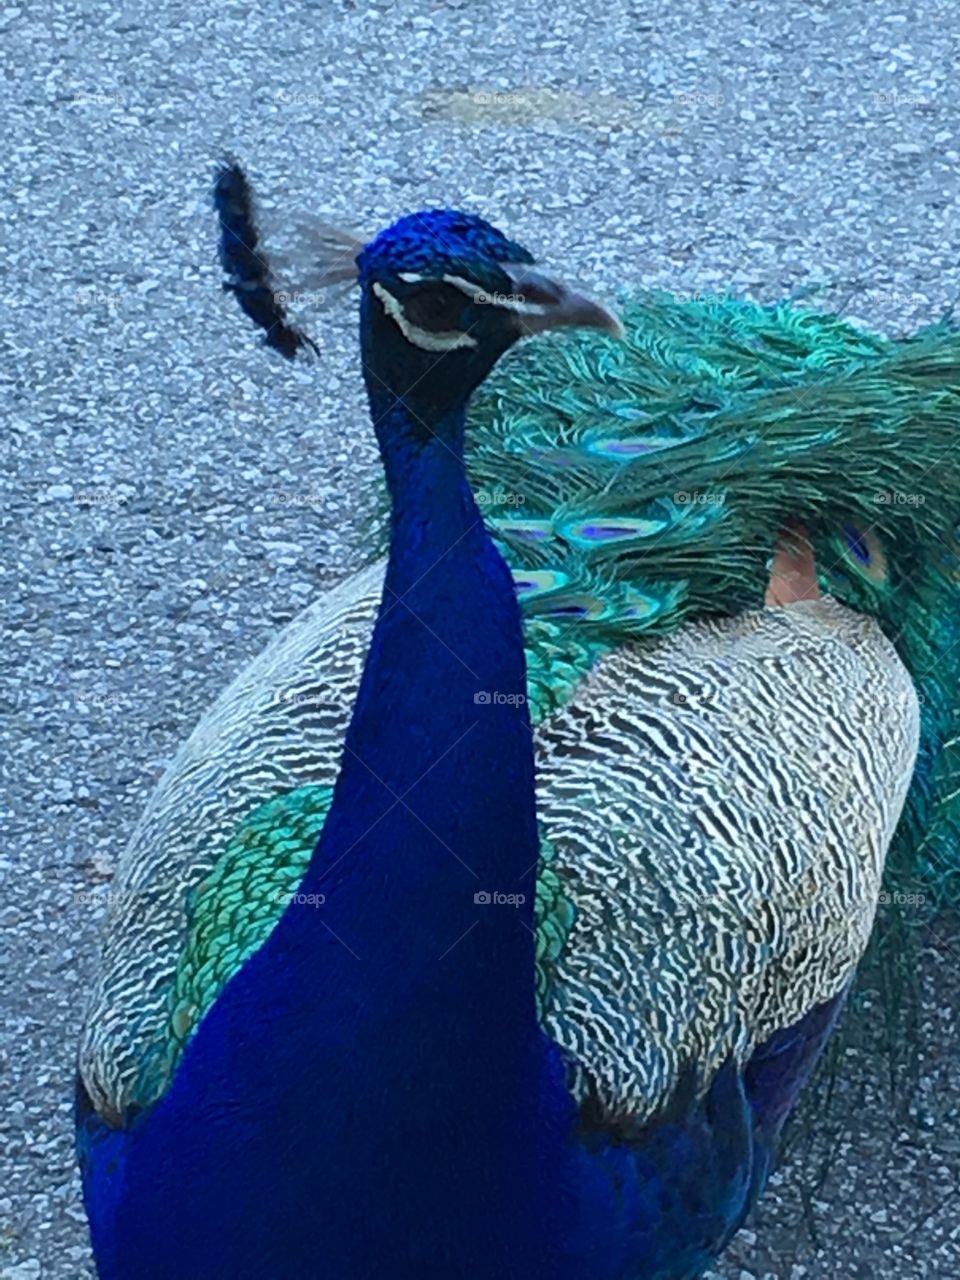 Peacock!